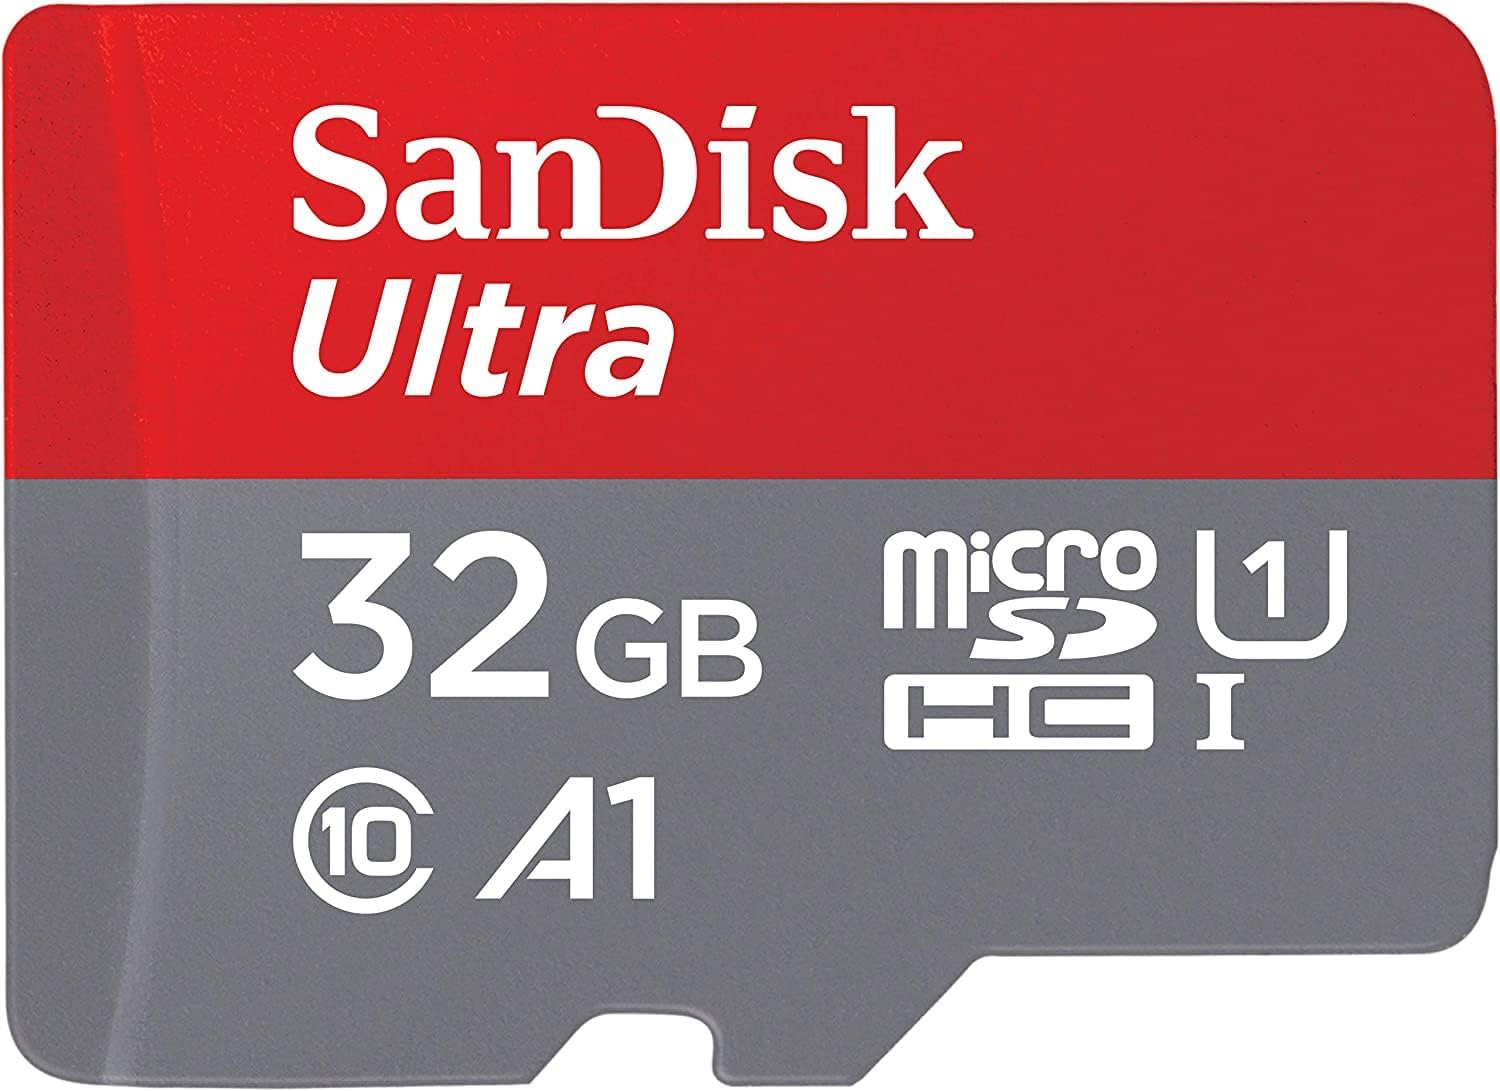 SanDisk Ultra UHS MicroSD Card 32GB